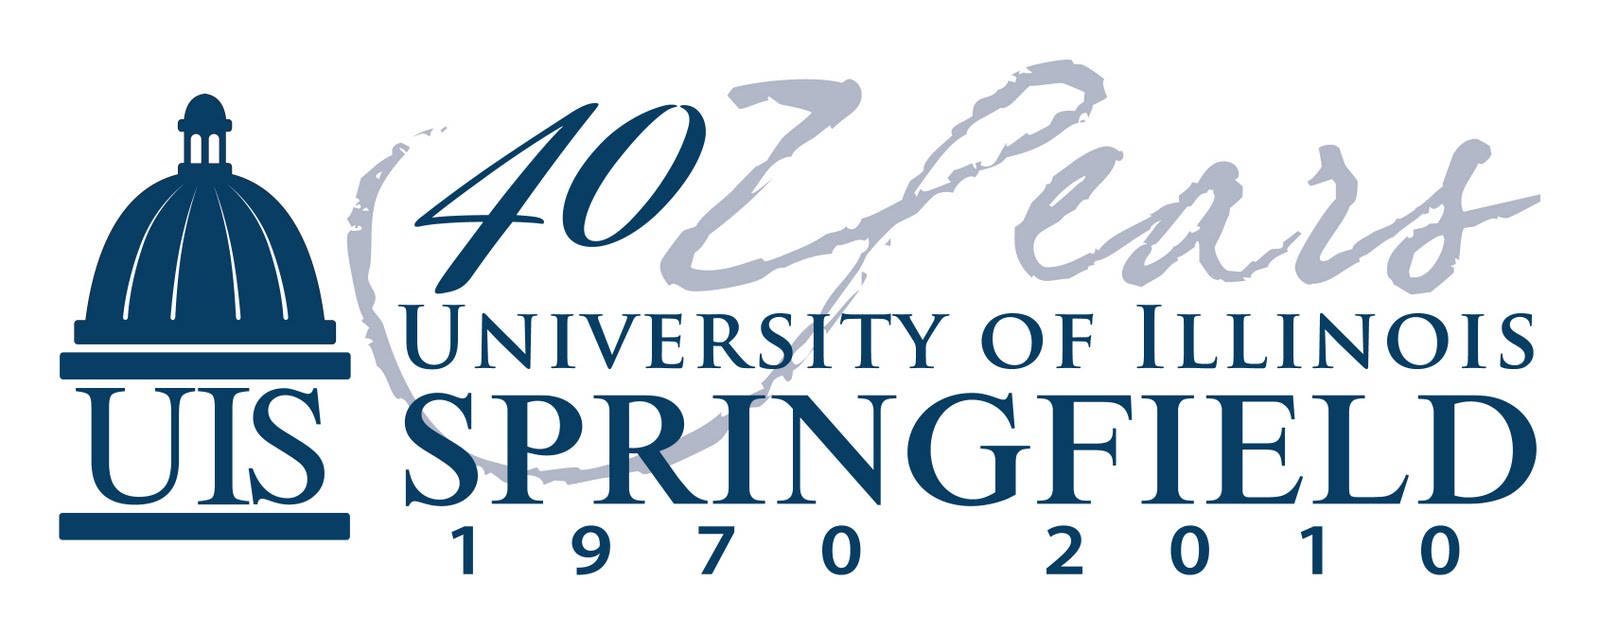 Travel university. University of Illinois Springfield. UIS логотип. University of Illinois logo. Springfield logo.